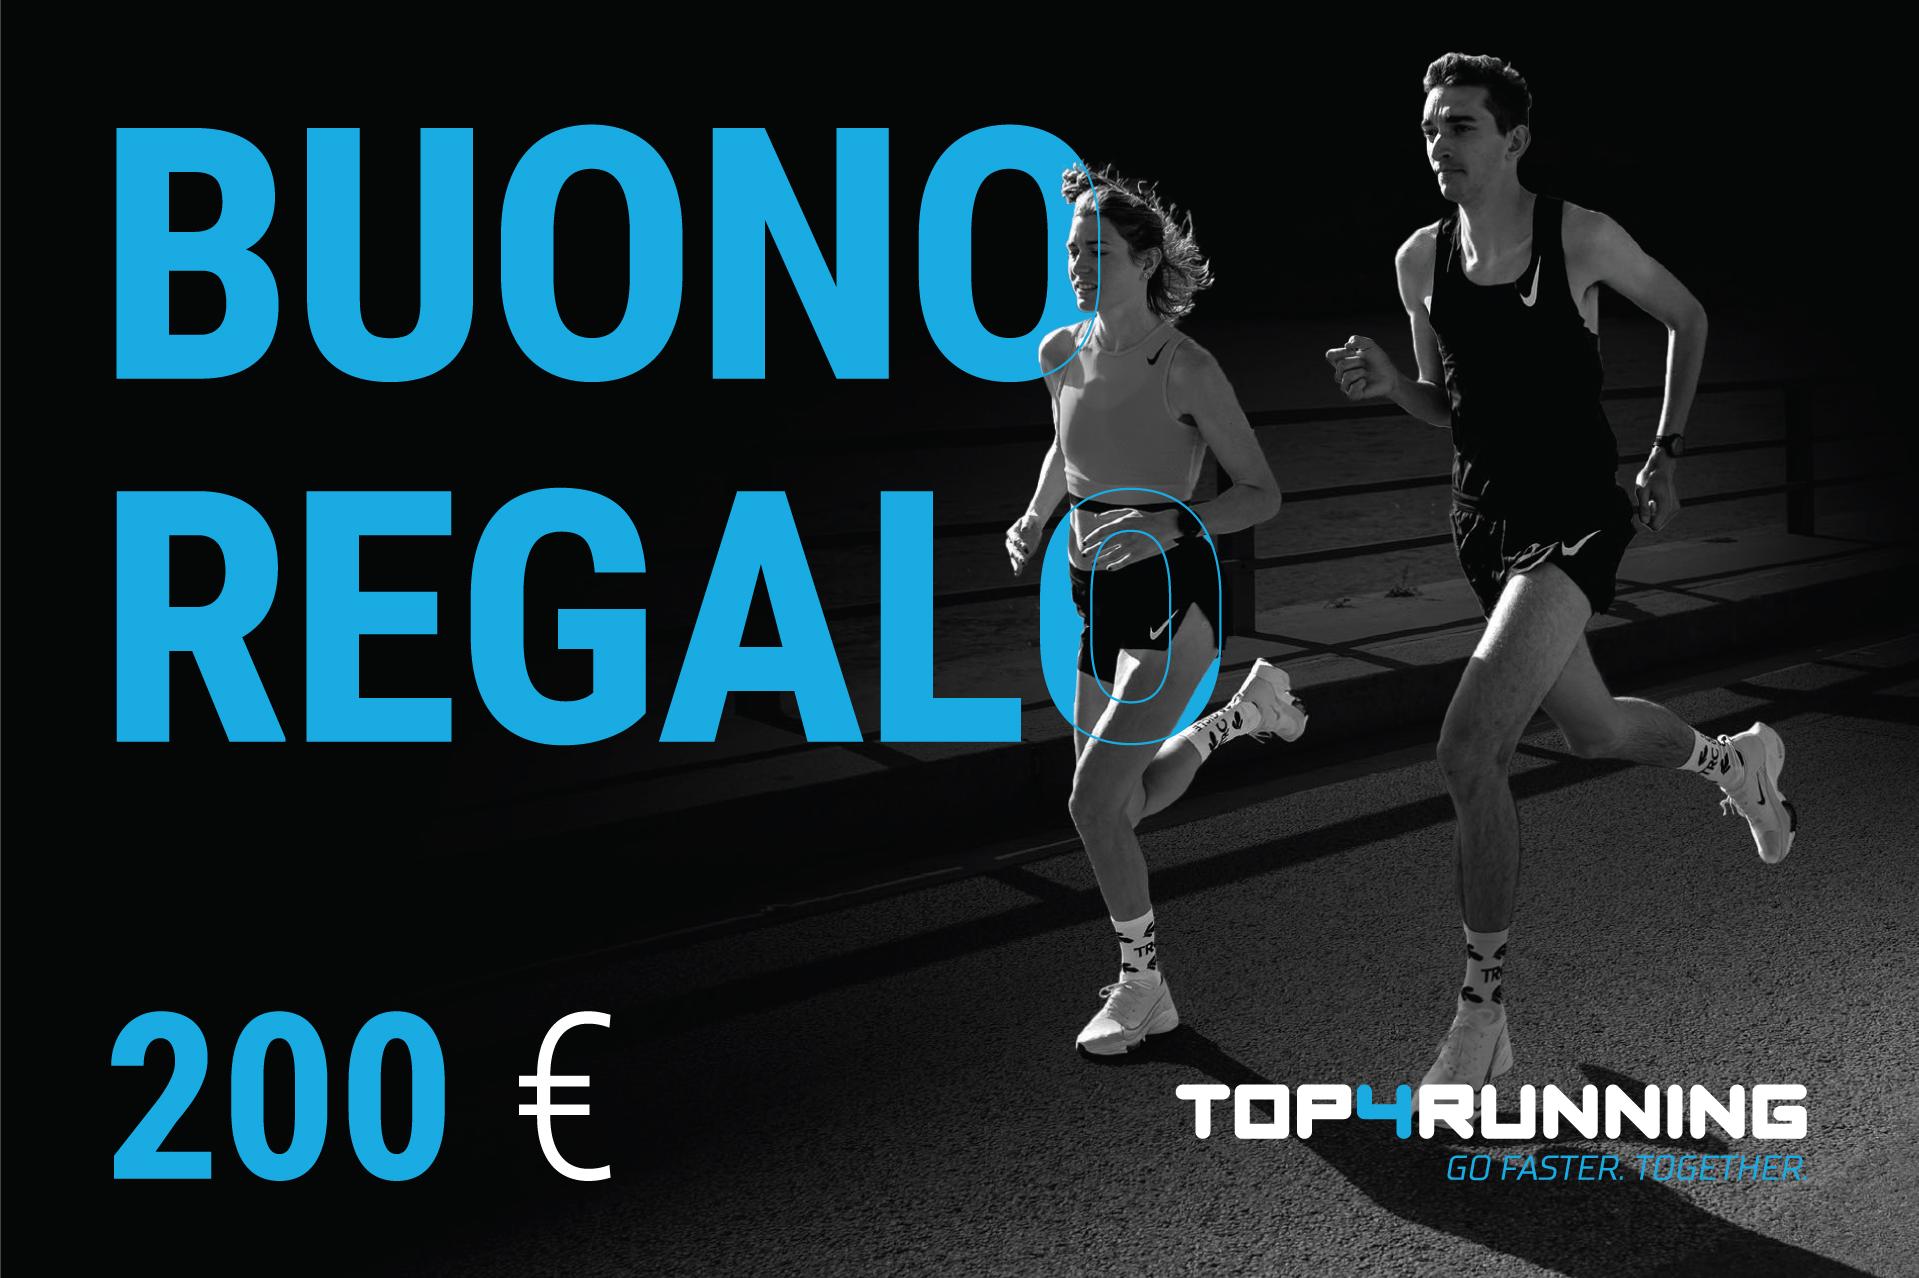 Top4running Buono regalo 200€